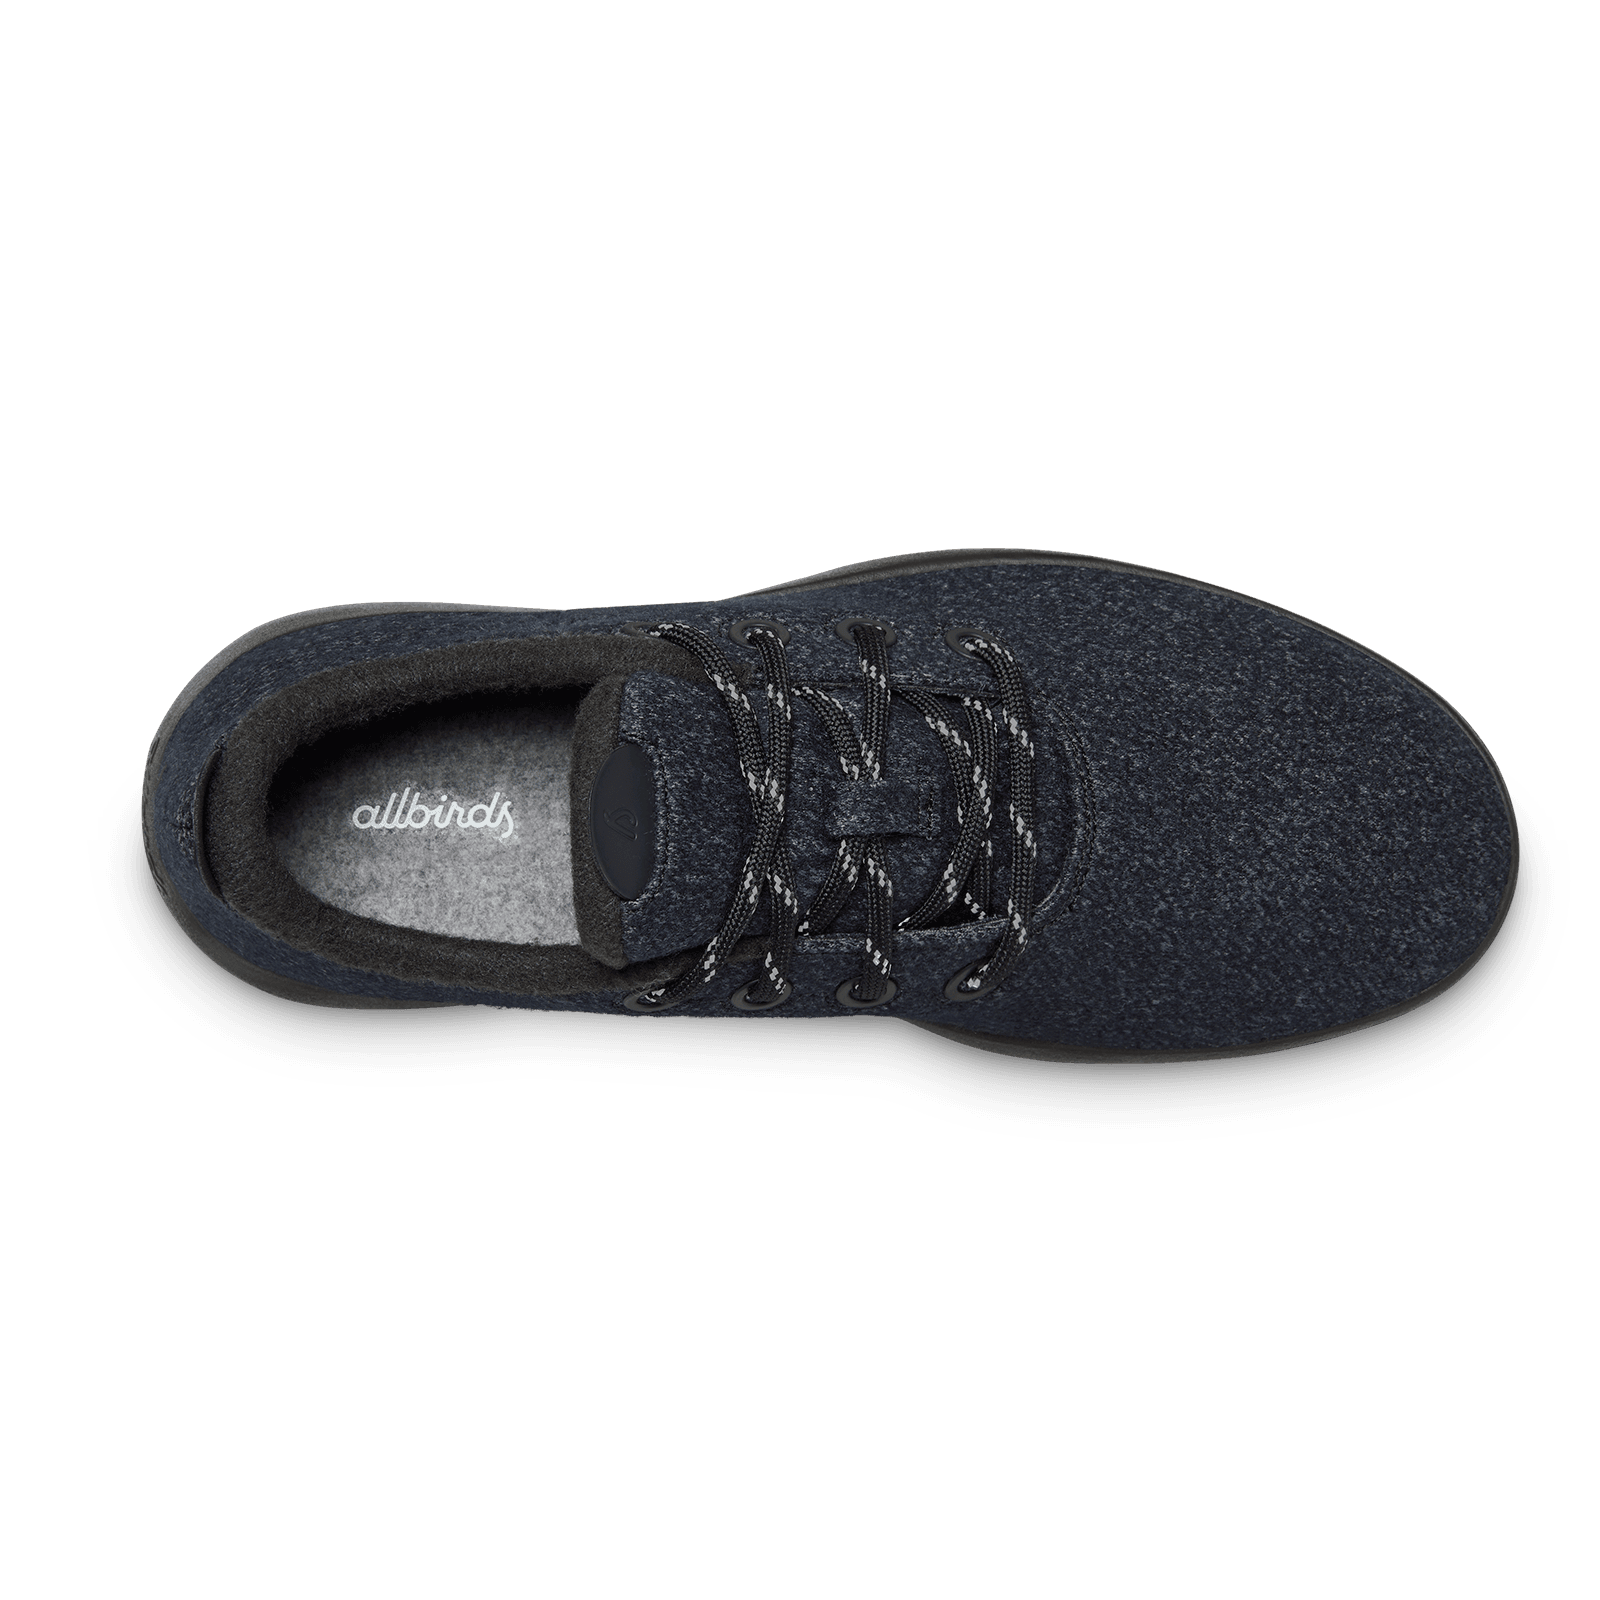 Men's Wool Runner Mizzles - Natural Black (Rugged Khaki Sole)